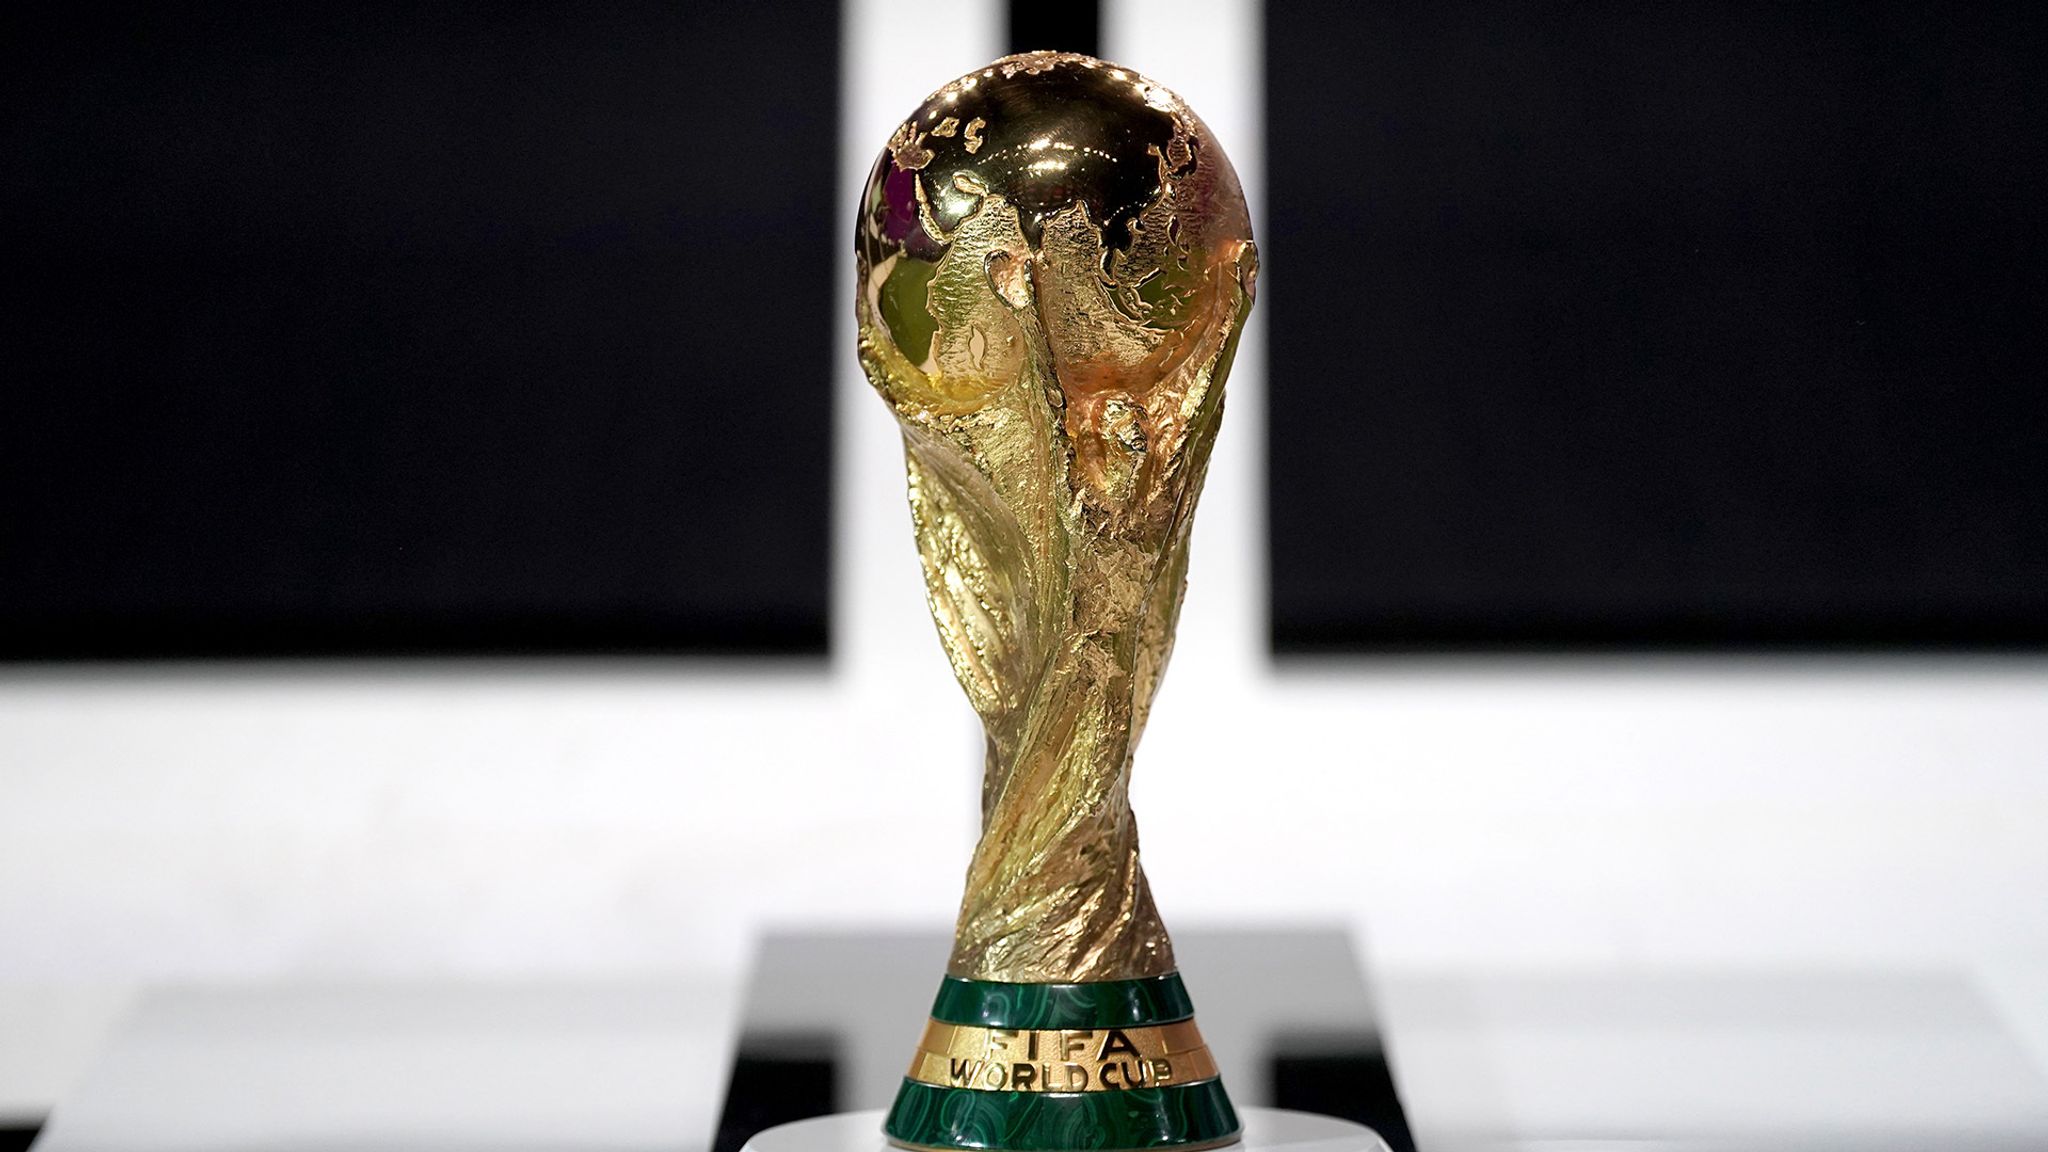 Morocco-Spain-Portugal to host 2030 World Cup, Saudi Arabia to bid